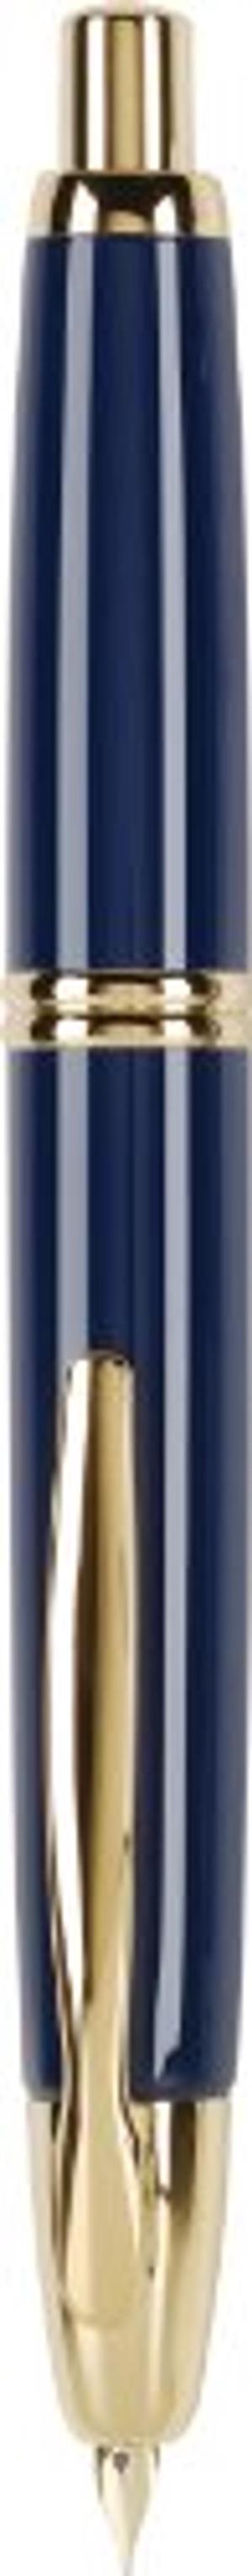 PILOT Vanishing Point Collection Refillable & Retractable Fountain Pen,  Matte Black Barrel, Blue Ink, Fine Nib (60580)